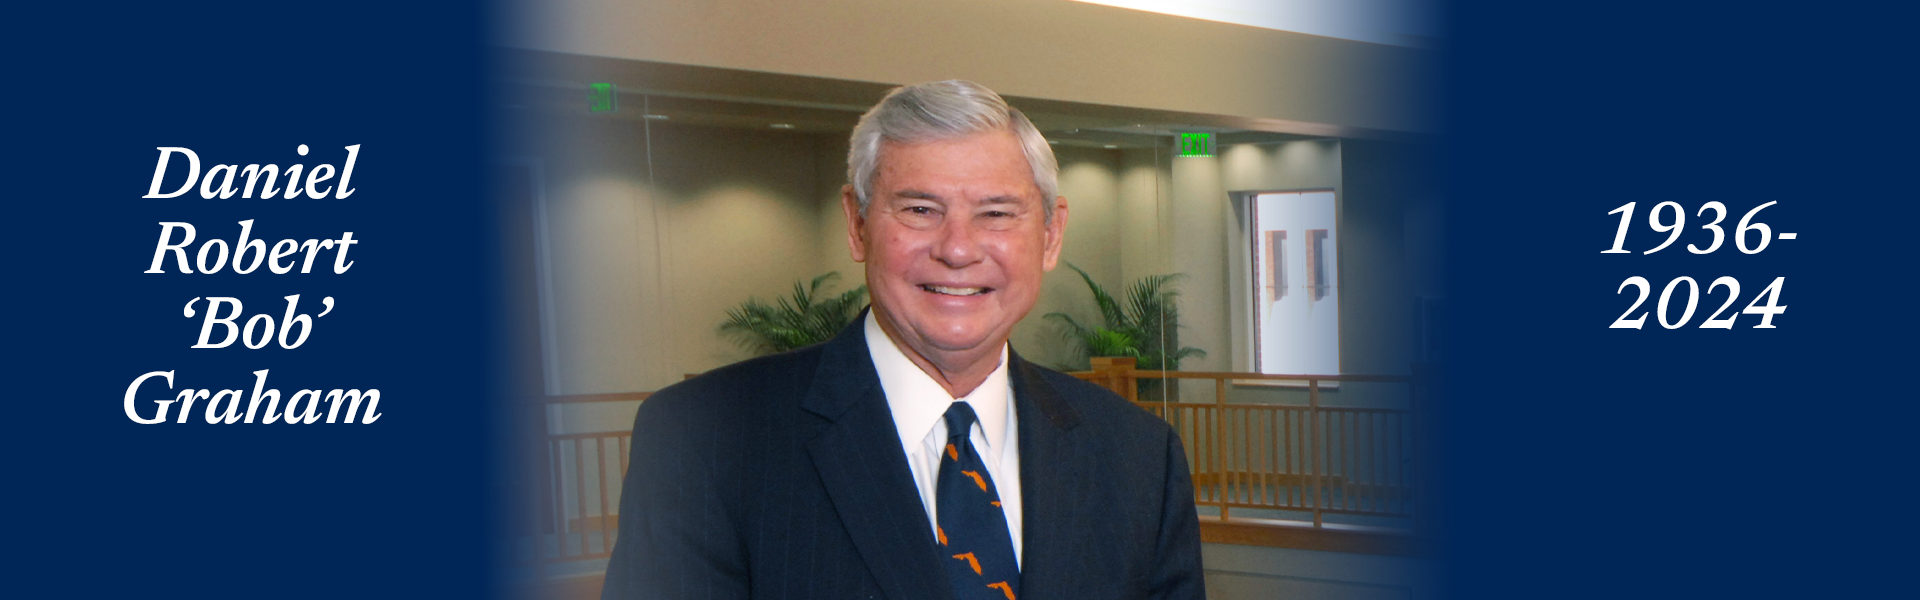 Daniel Robert 'Bob' Graham was Florida governor and US senator